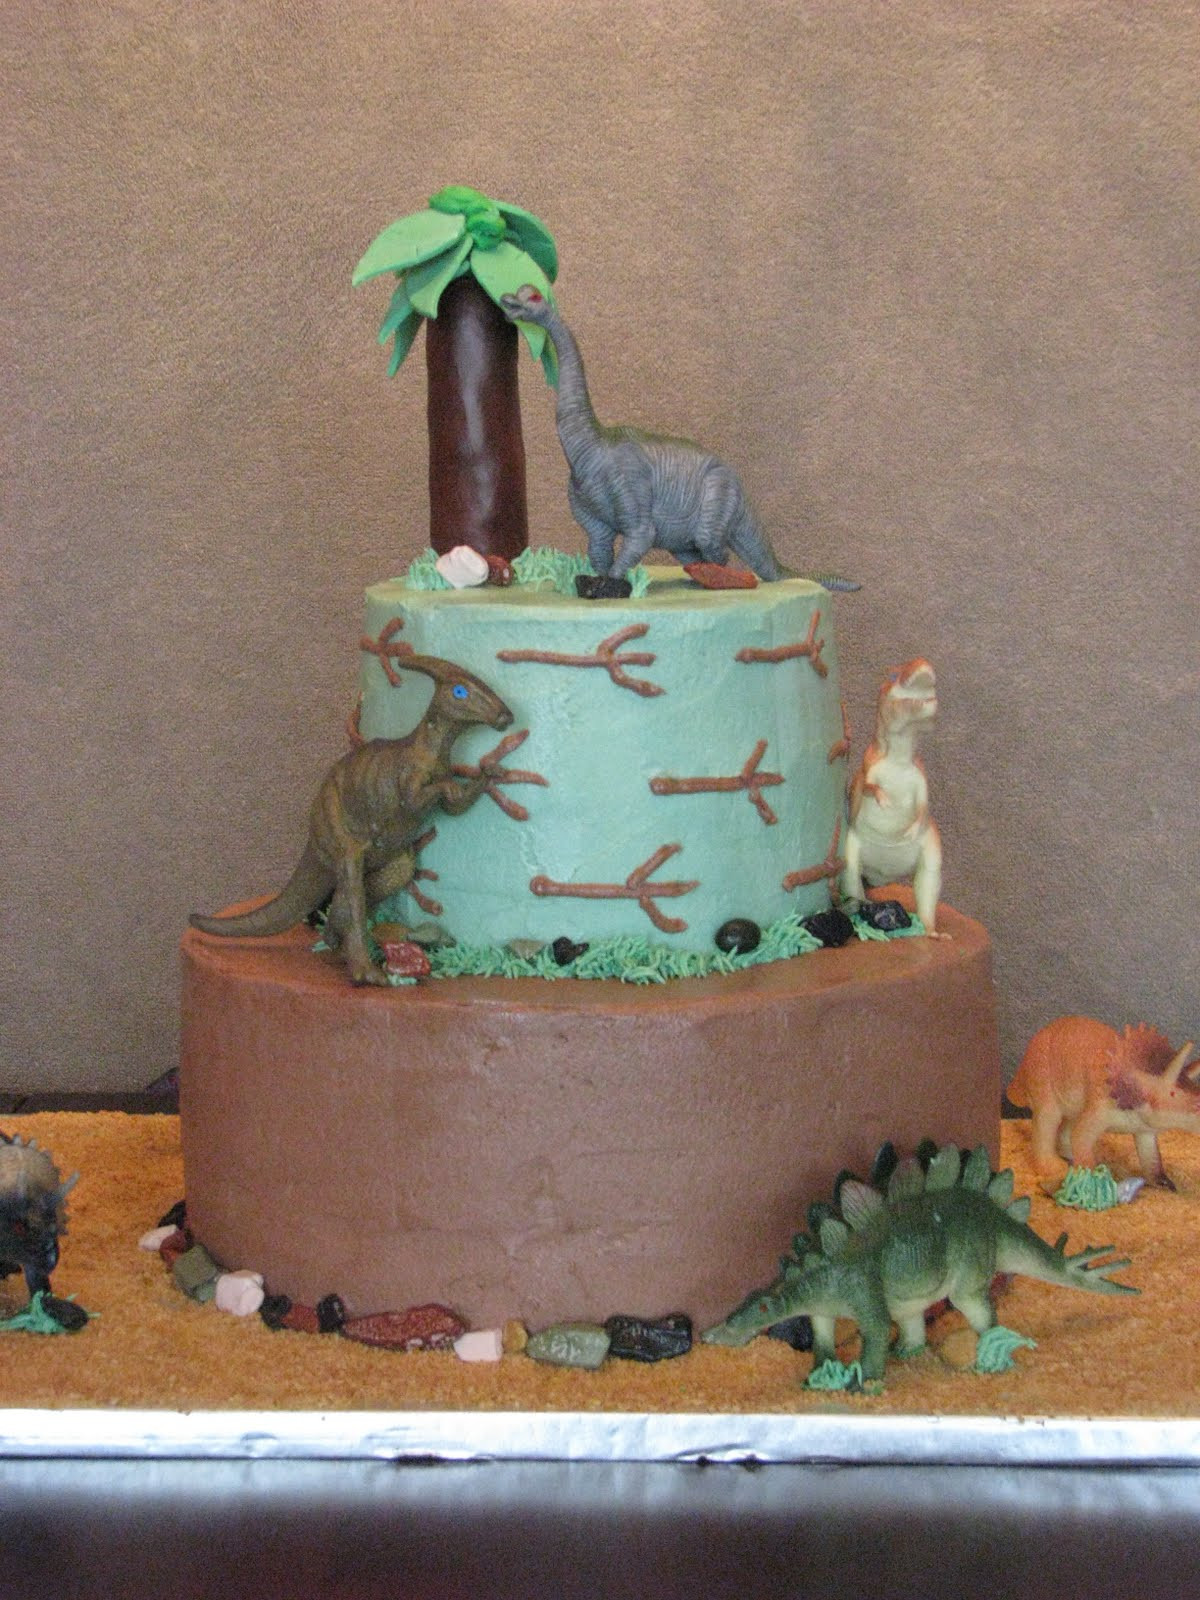 Best ideas about Dinosaur Birthday Cake
. Save or Pin Bake me a Cake Dinosaur Birthday Cake Now.